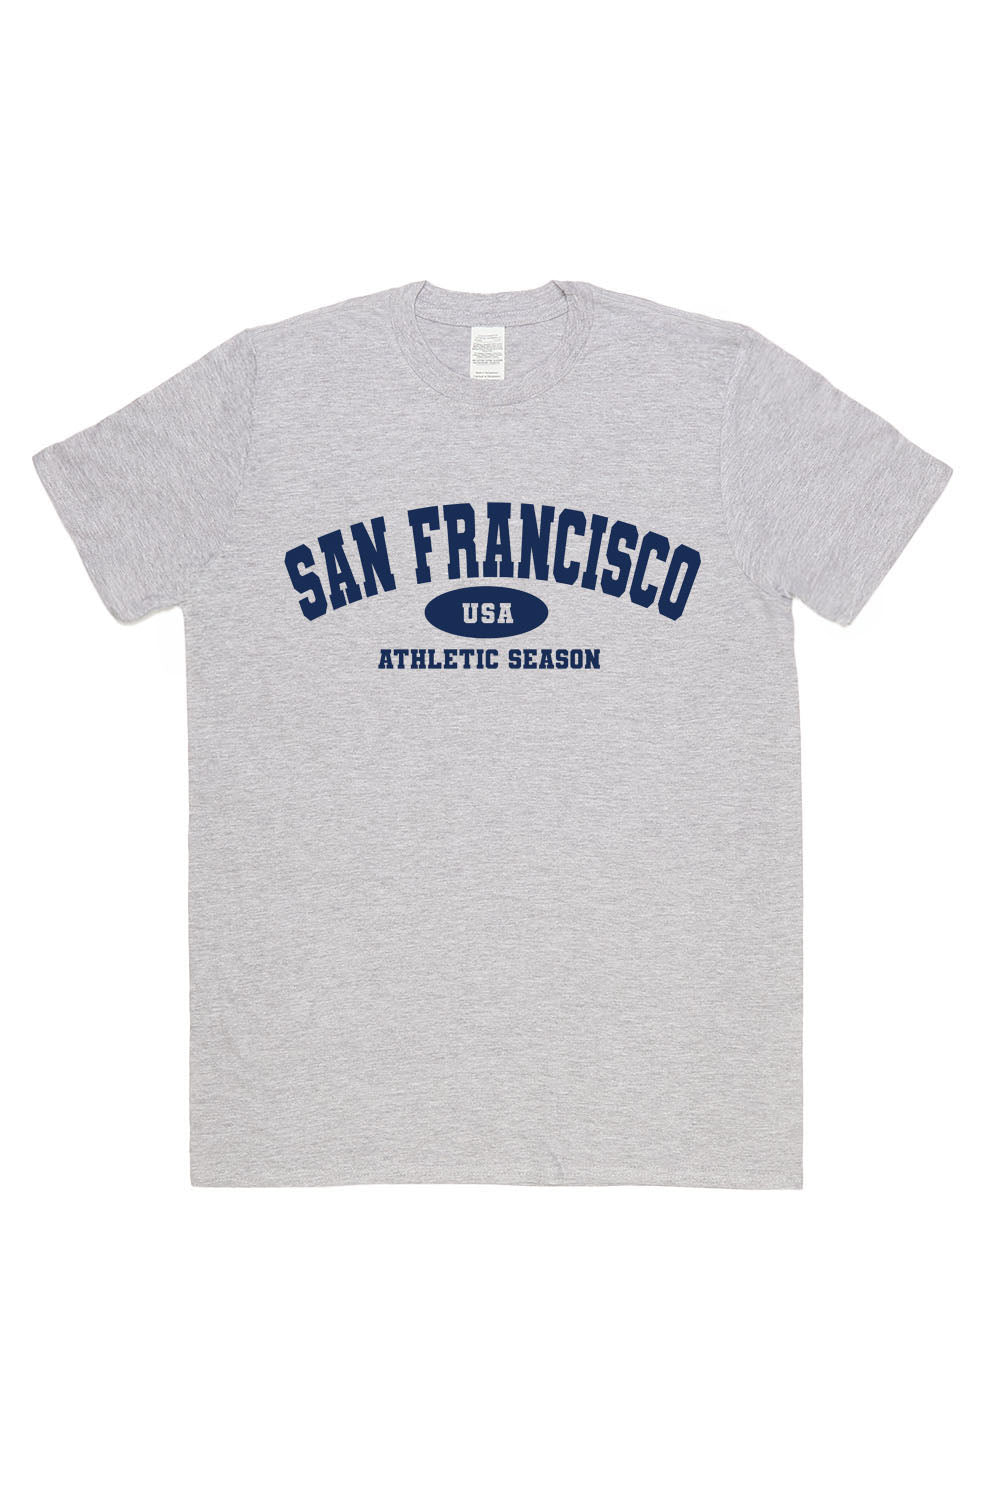 San Francisco T-Shirt in Ash Grey (Custom Packs)